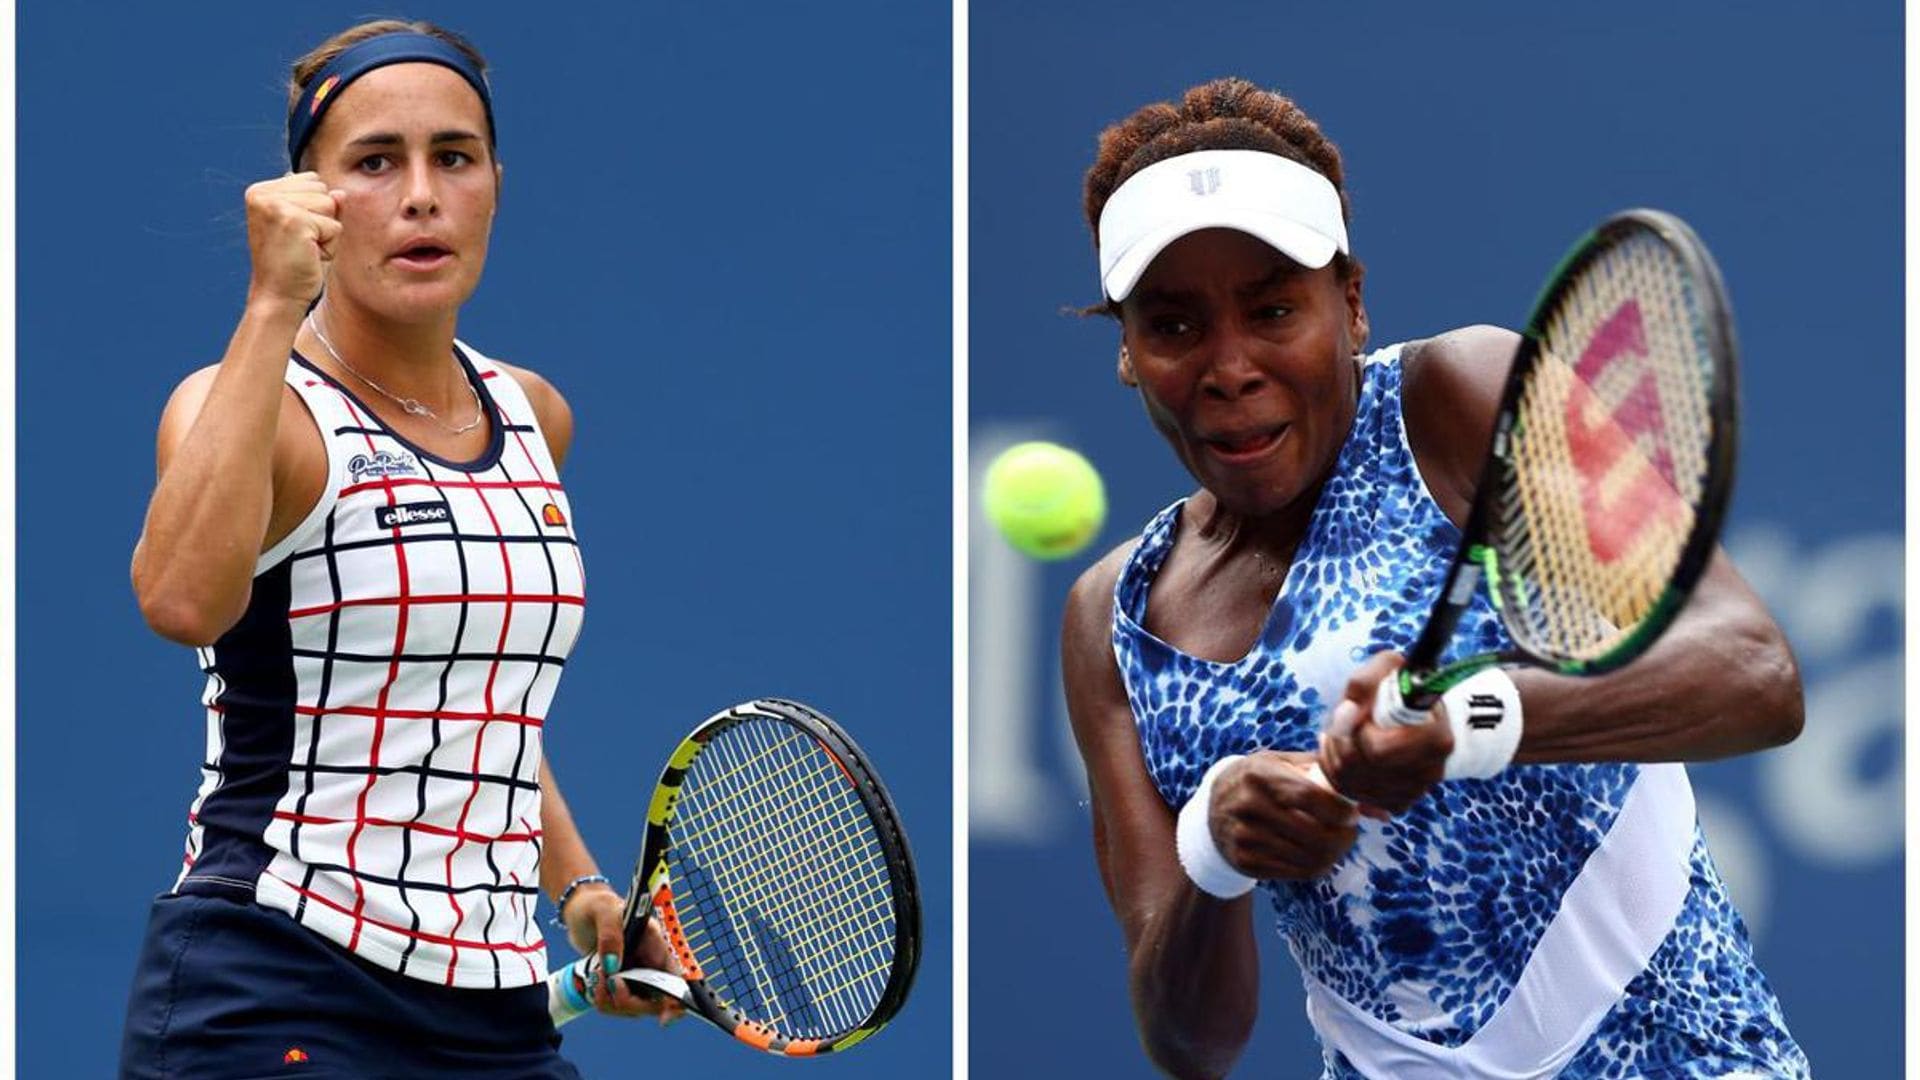 Monica Puig: A tennis icon bids farewell in 'The Battle of the Legends' versus Venus Williams